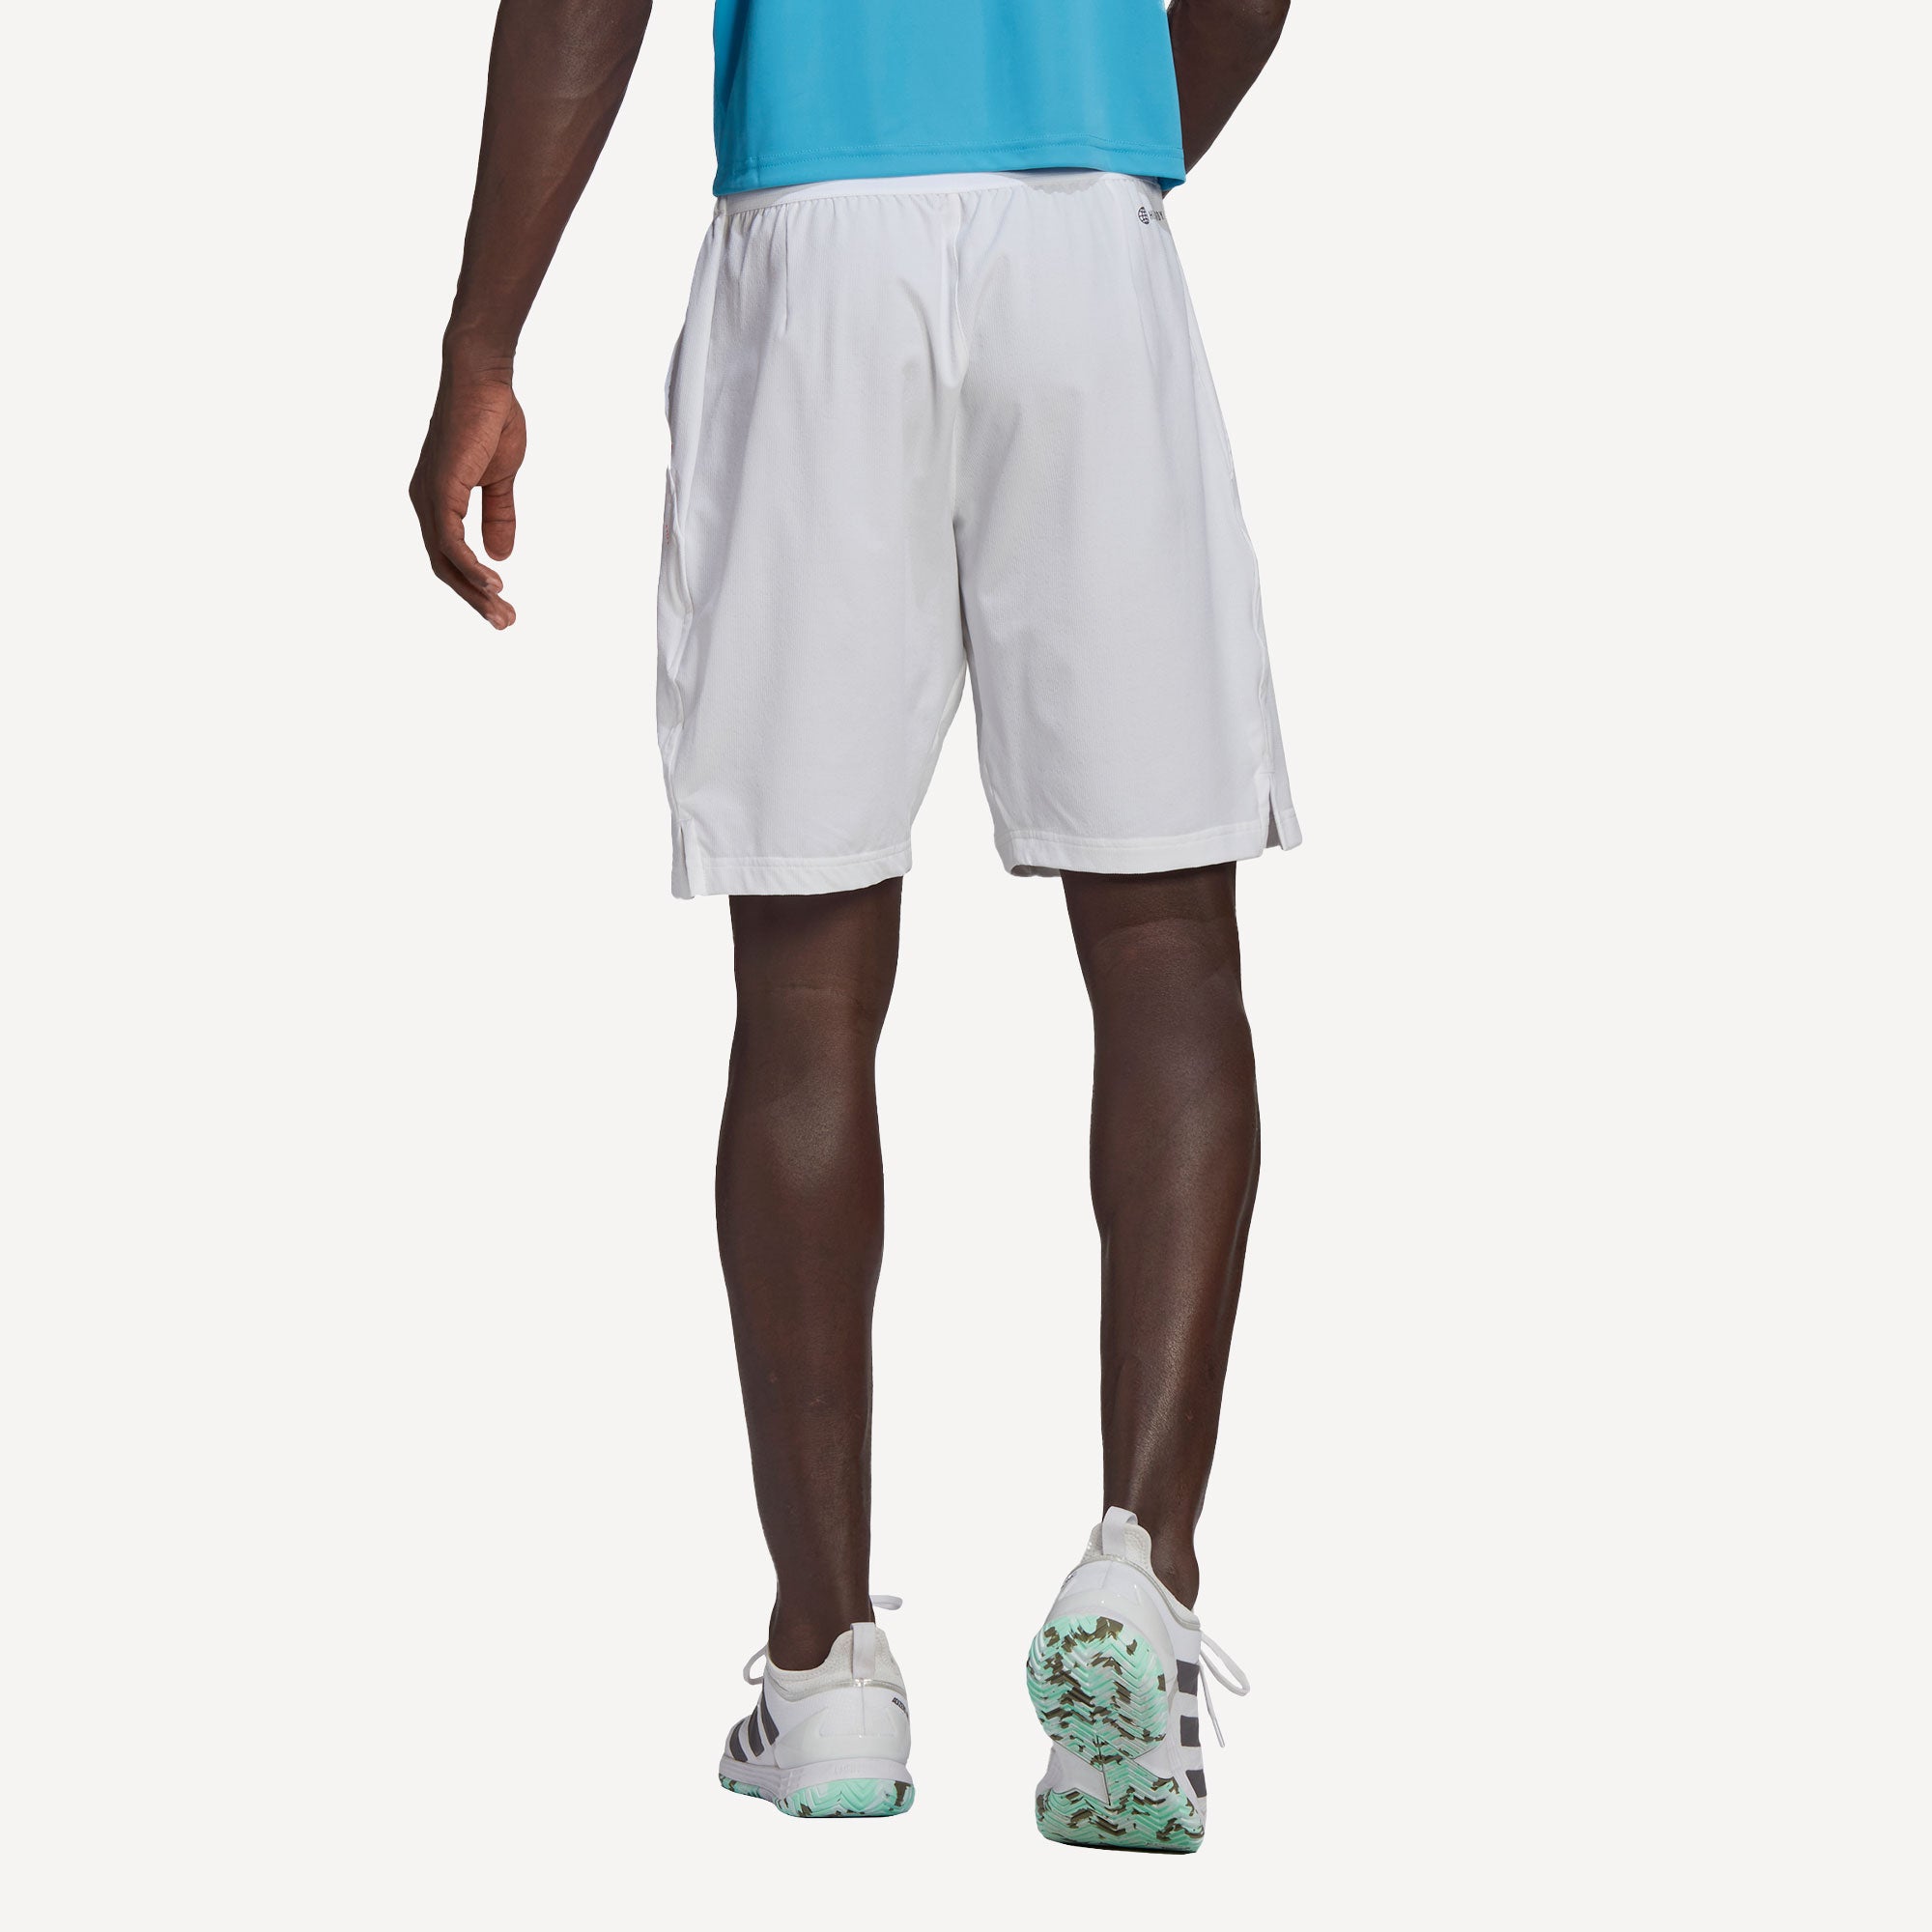 adidas Ergo Men's 9-Inch Tennis Shorts White (2)